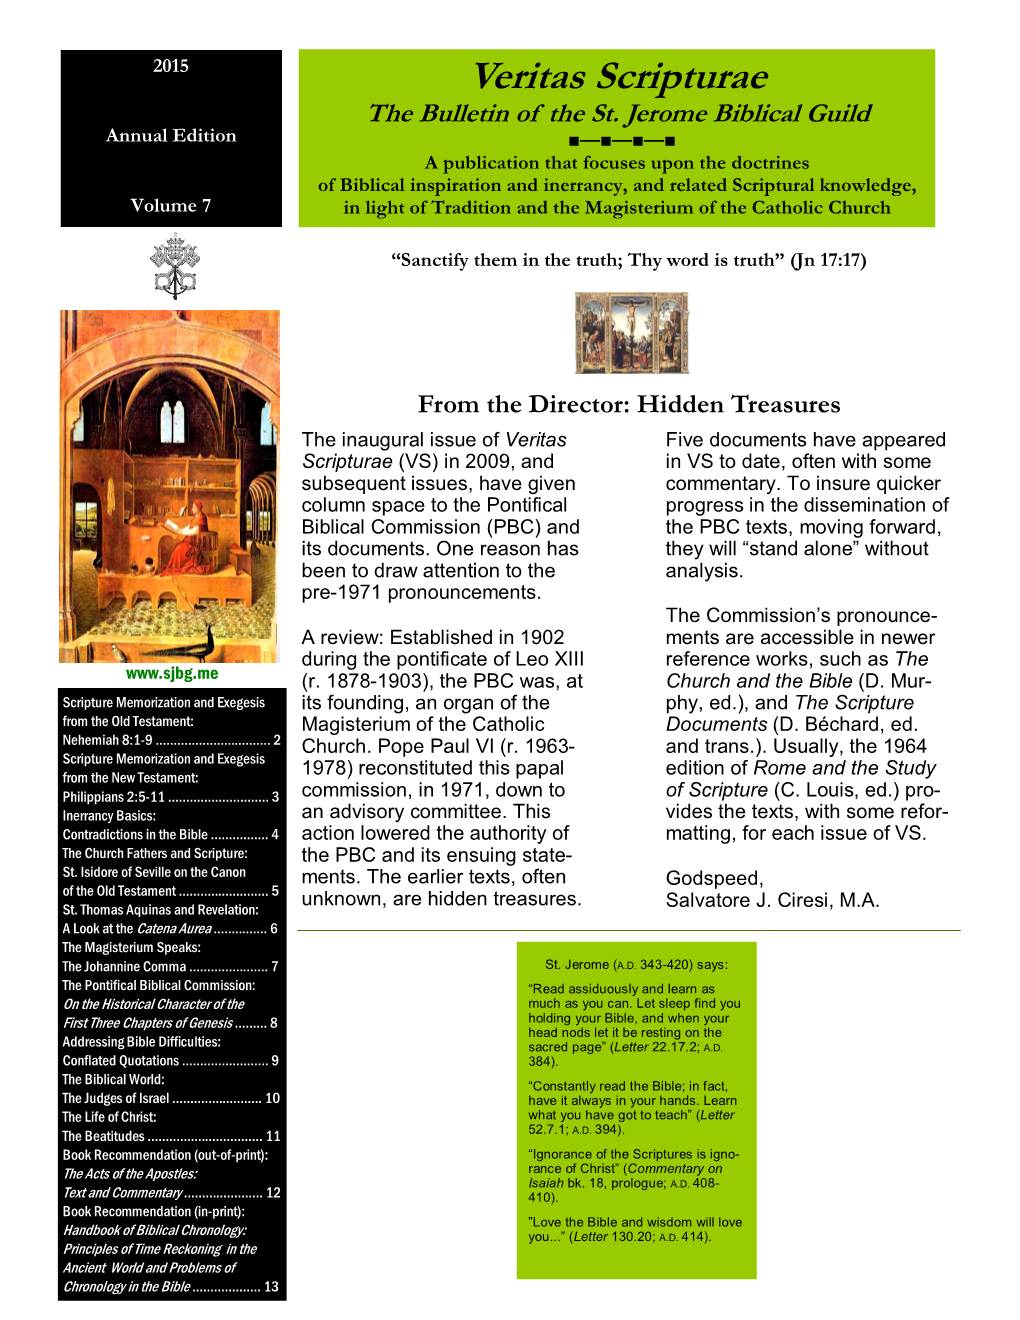 Veritas Scripturae the Bulletin of the St